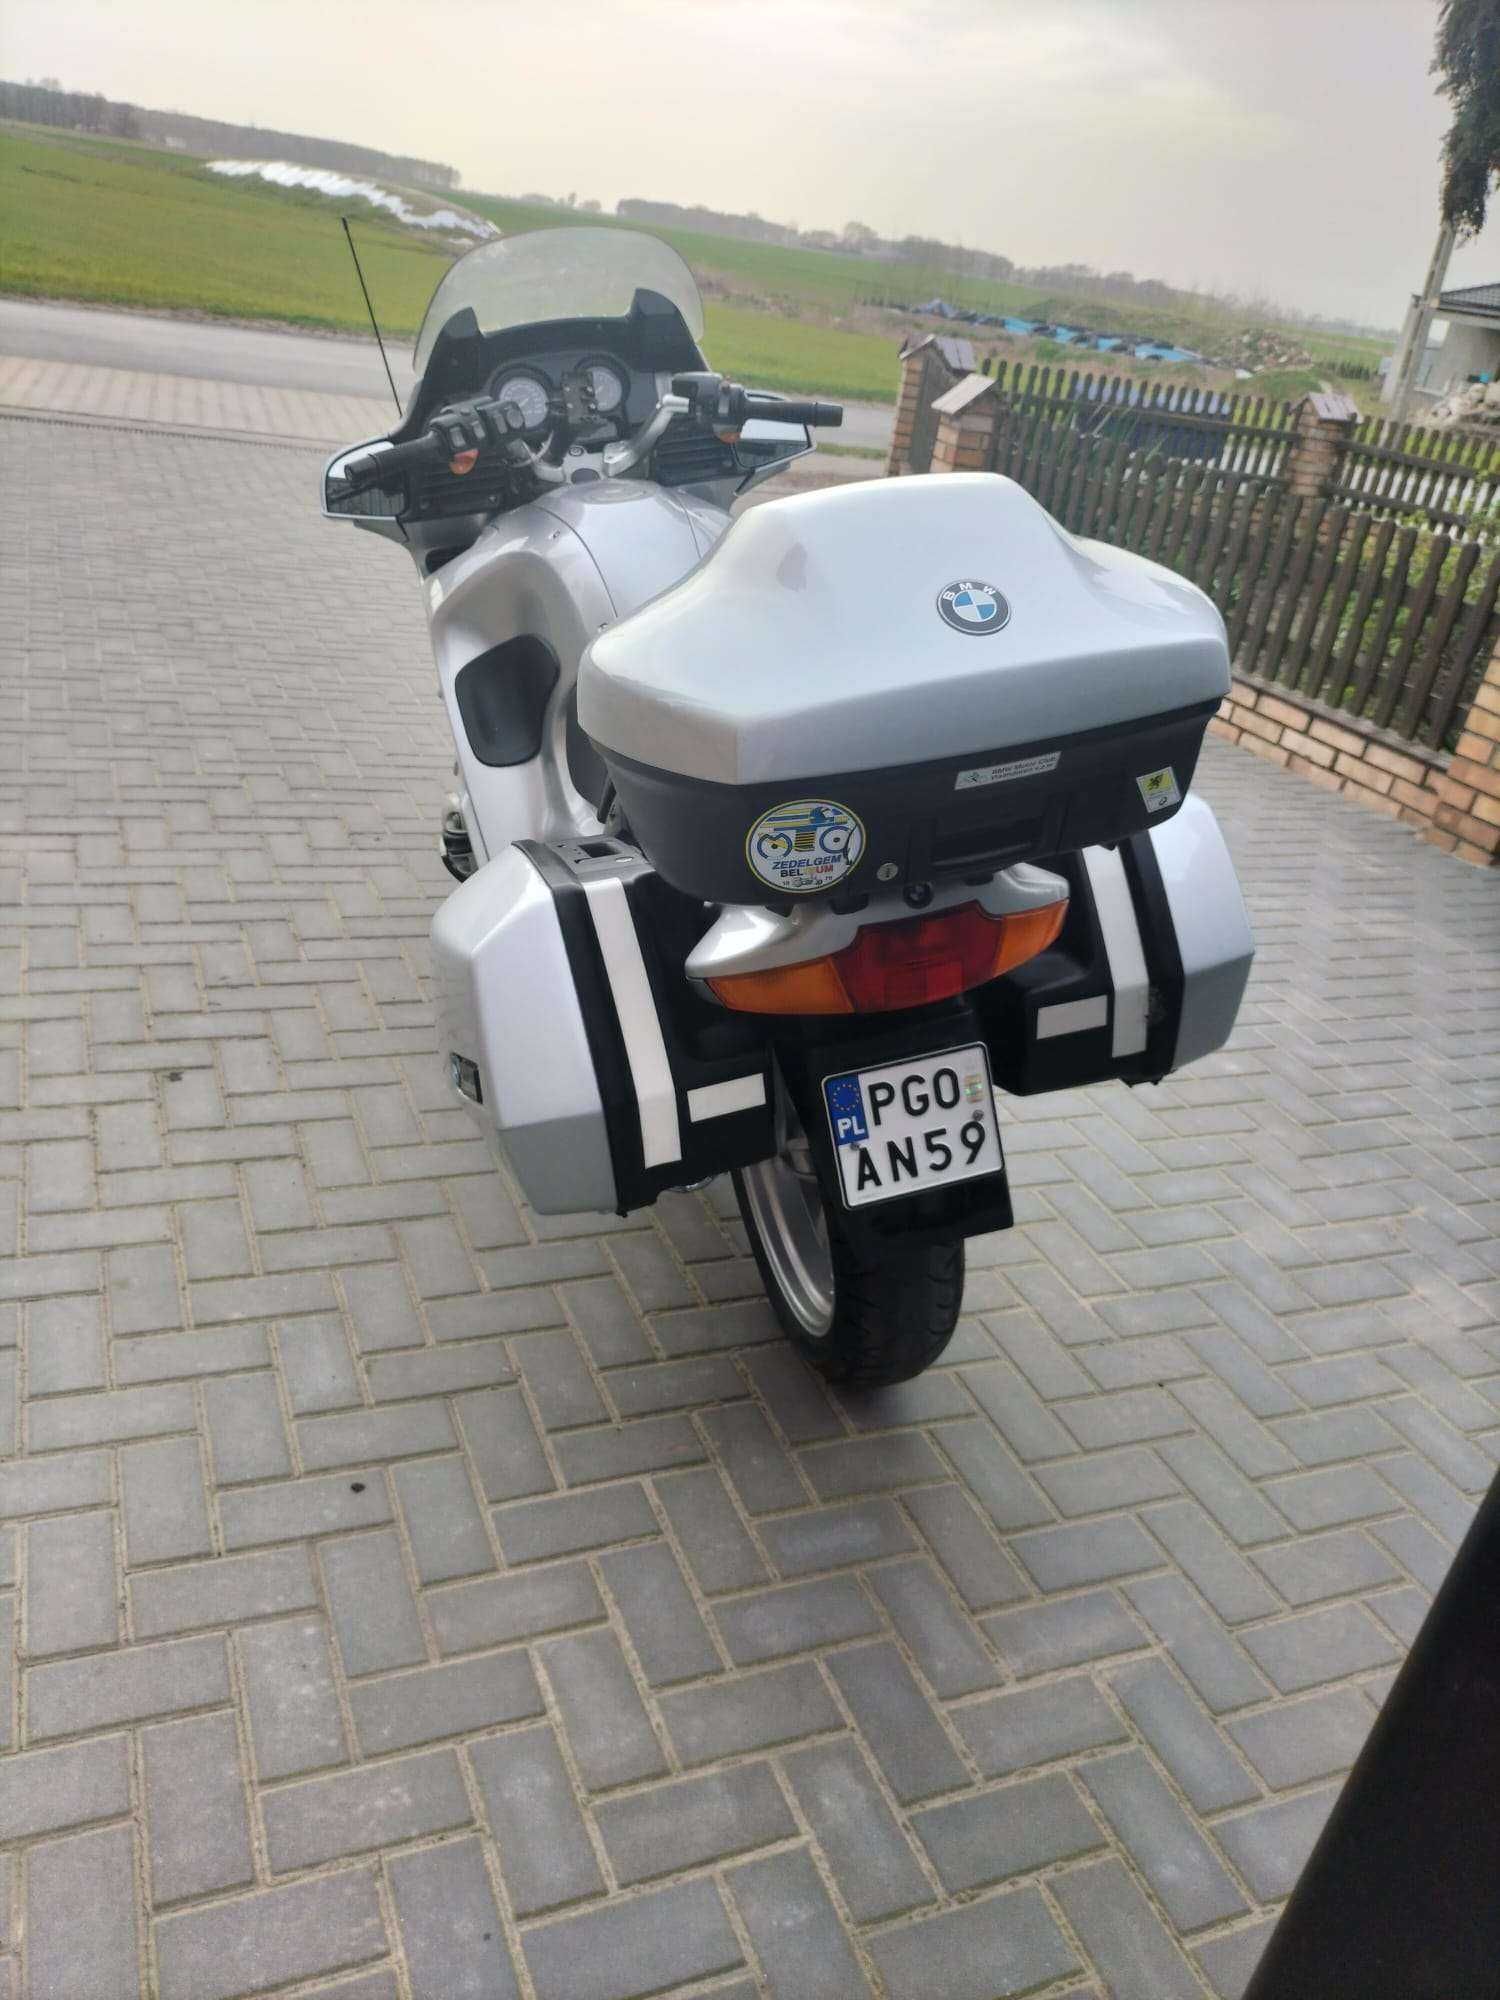 Motocykl BMW 1150 RT